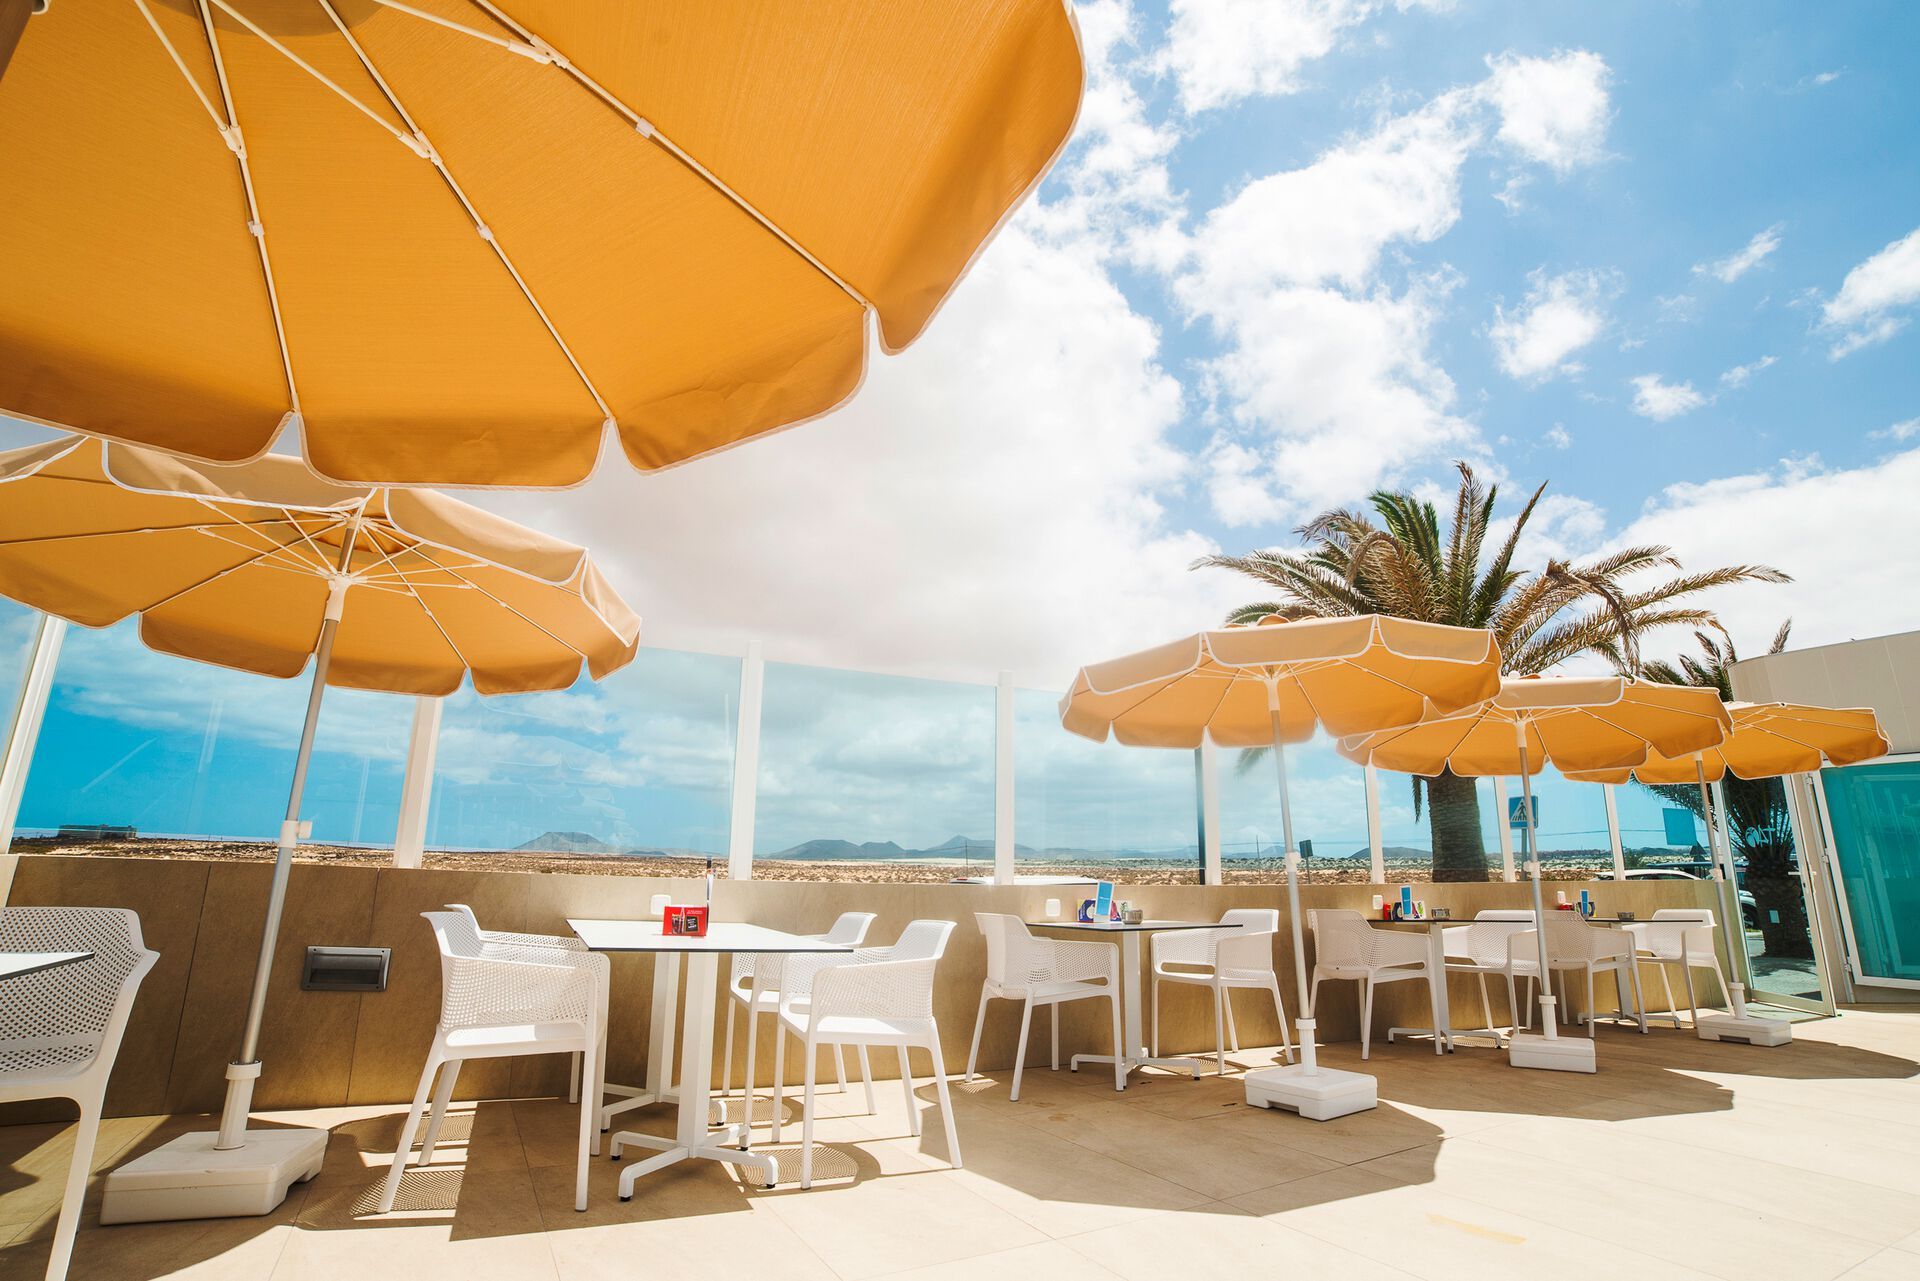 Canaries - Fuerteventura - Espagne - Hotel Boutique Tao Caleta Mar 3*